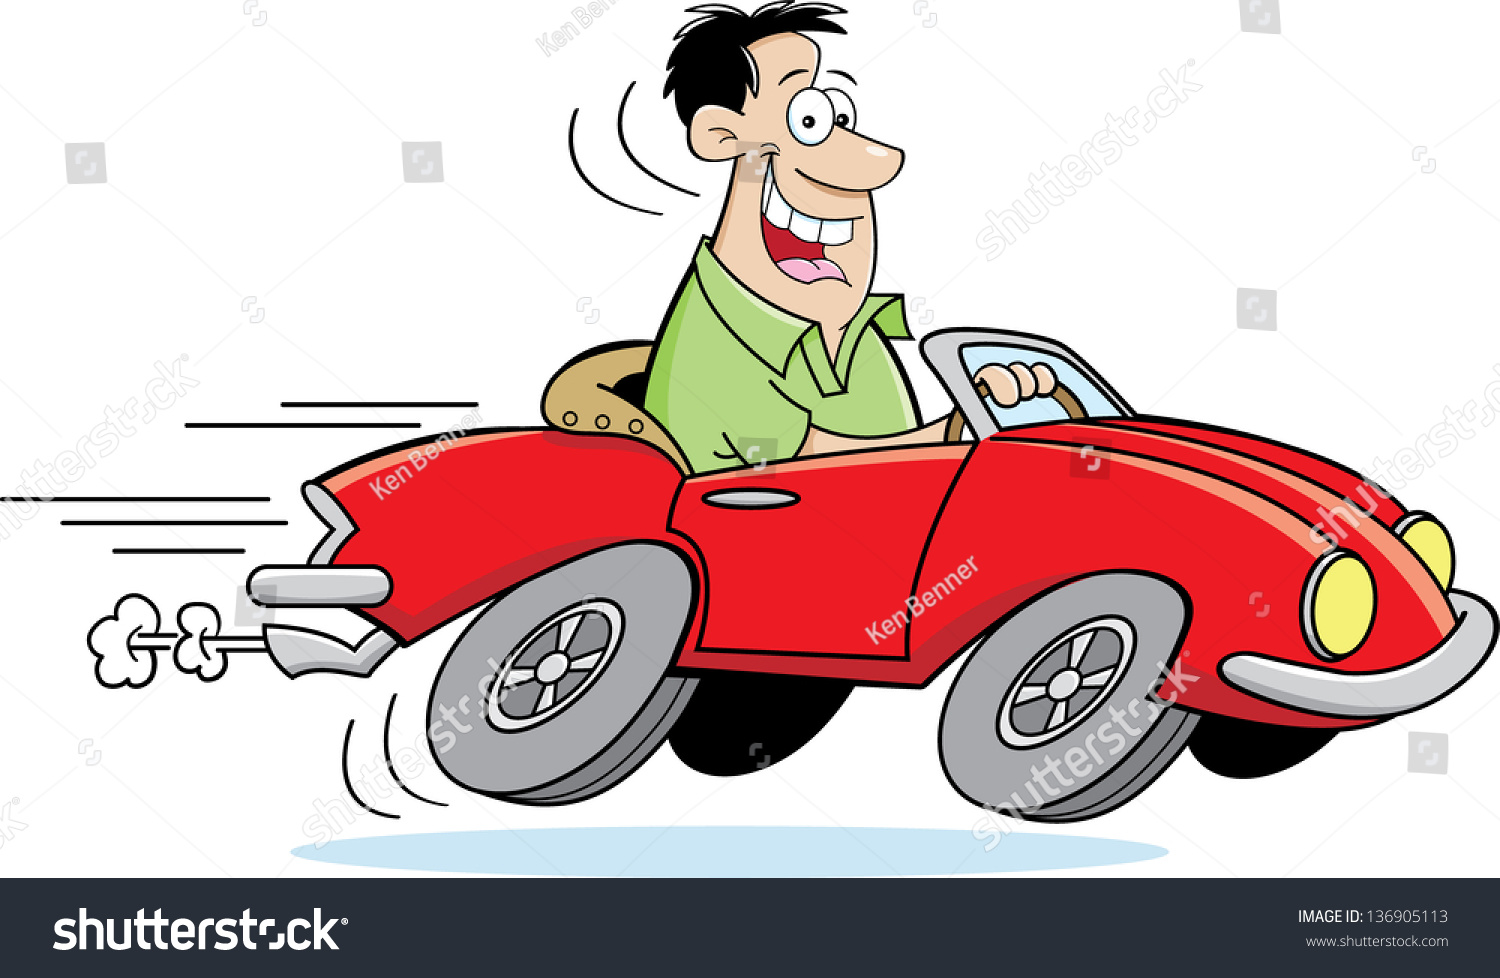 Cartoon Illustration Of A Man Driving A Car. - 136905113 : Shutterstock